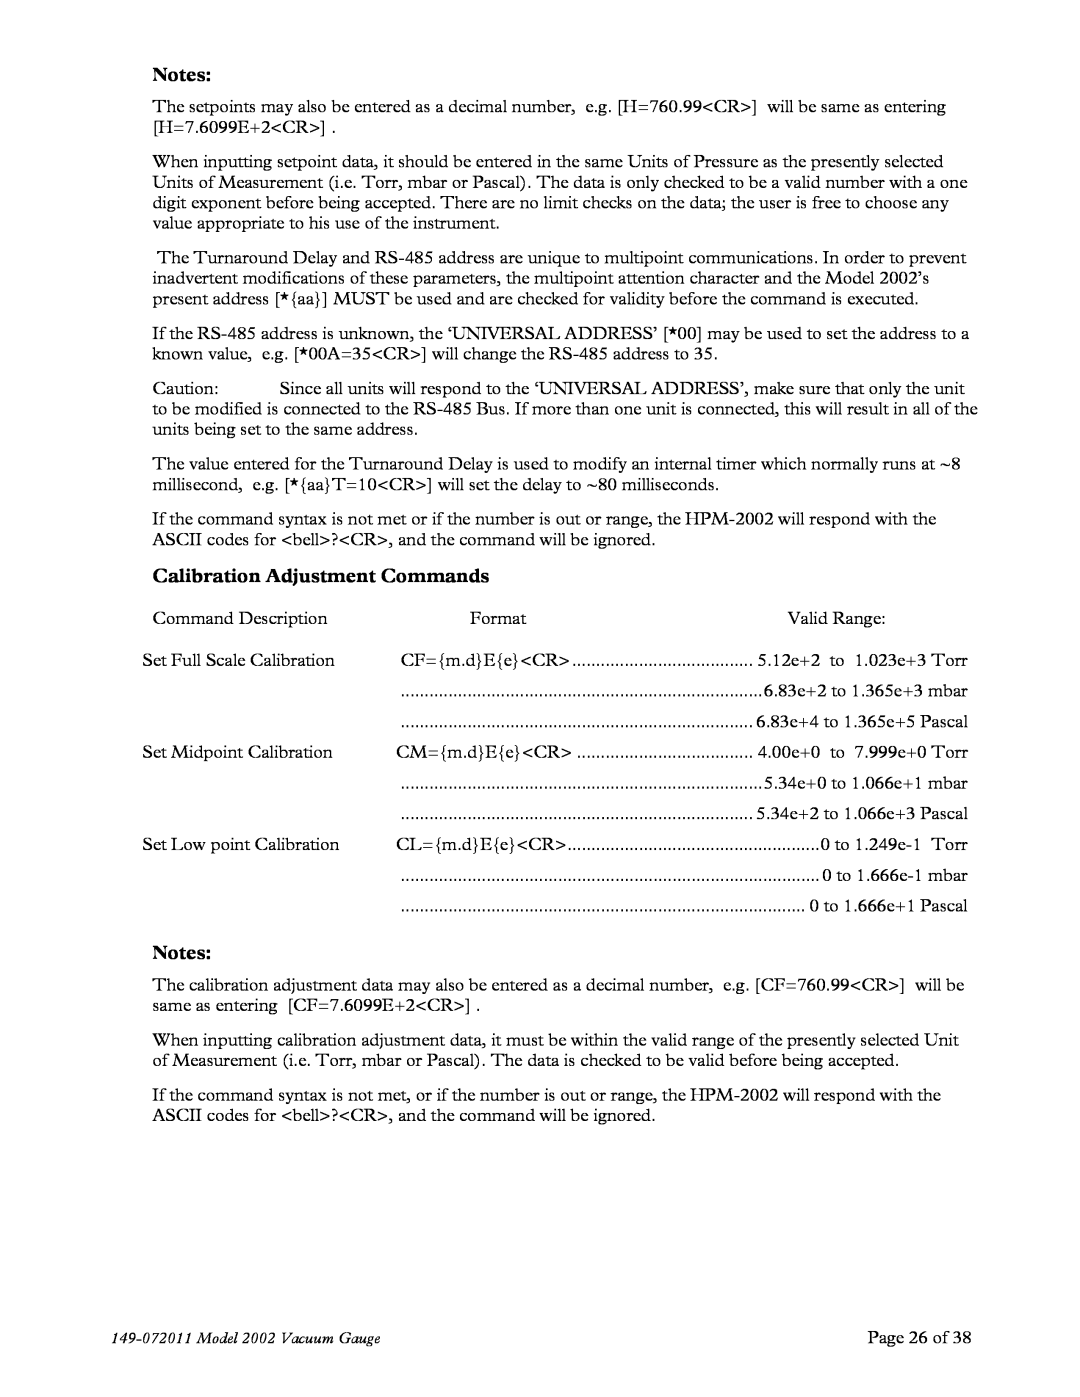 Teledyne 2002 instruction manual Calibration Adjustment Commands, Page 26 of 